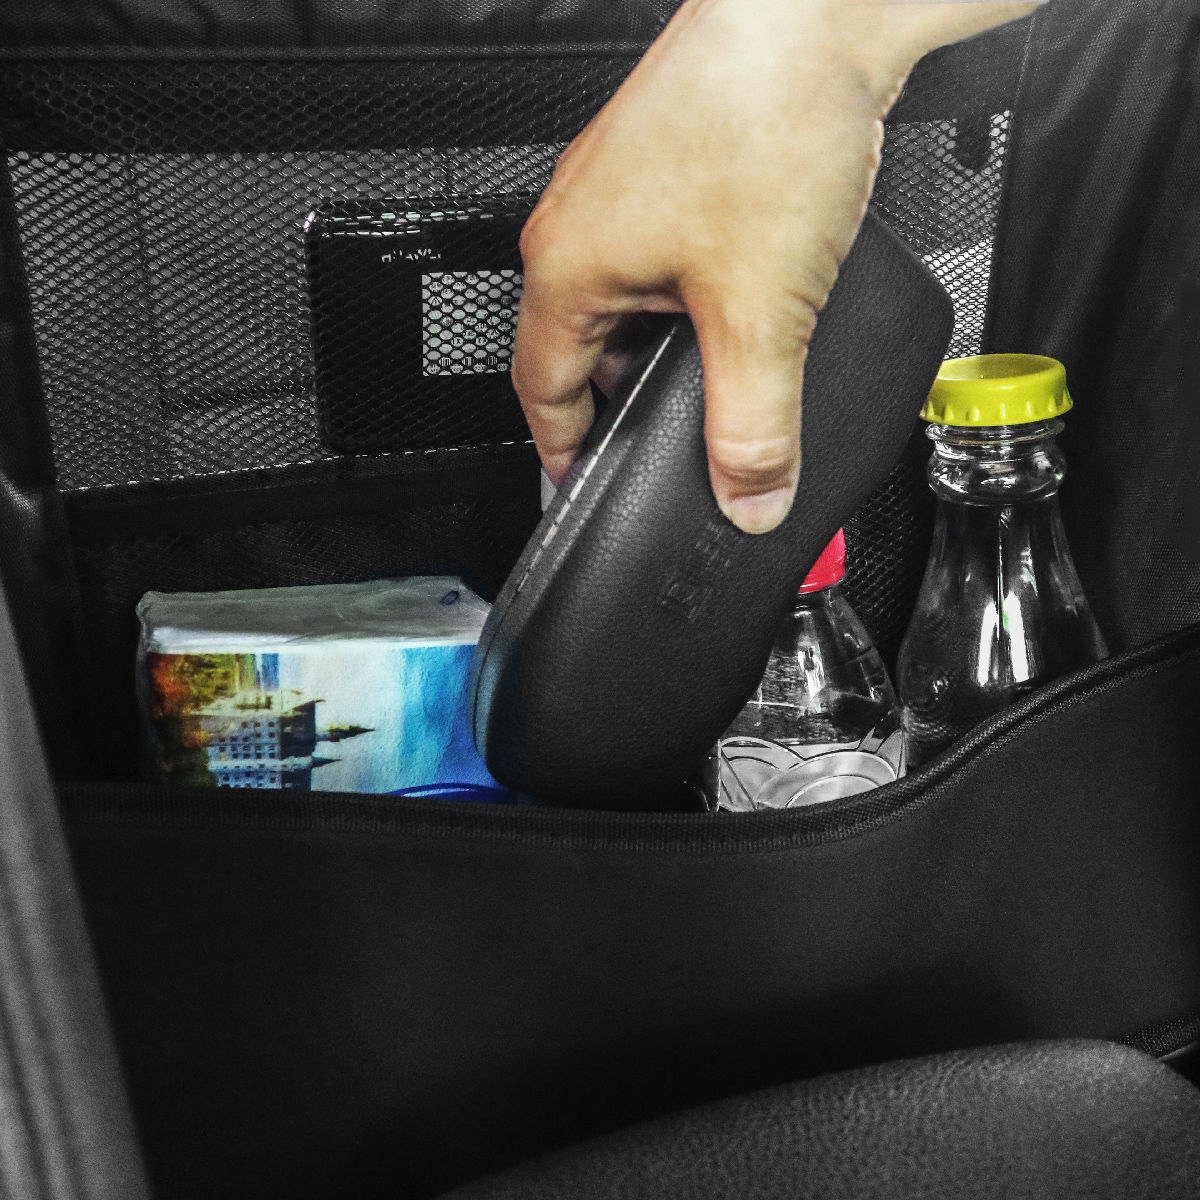  AMEIQ Car Organizer, Storage Bag Between Front Seats